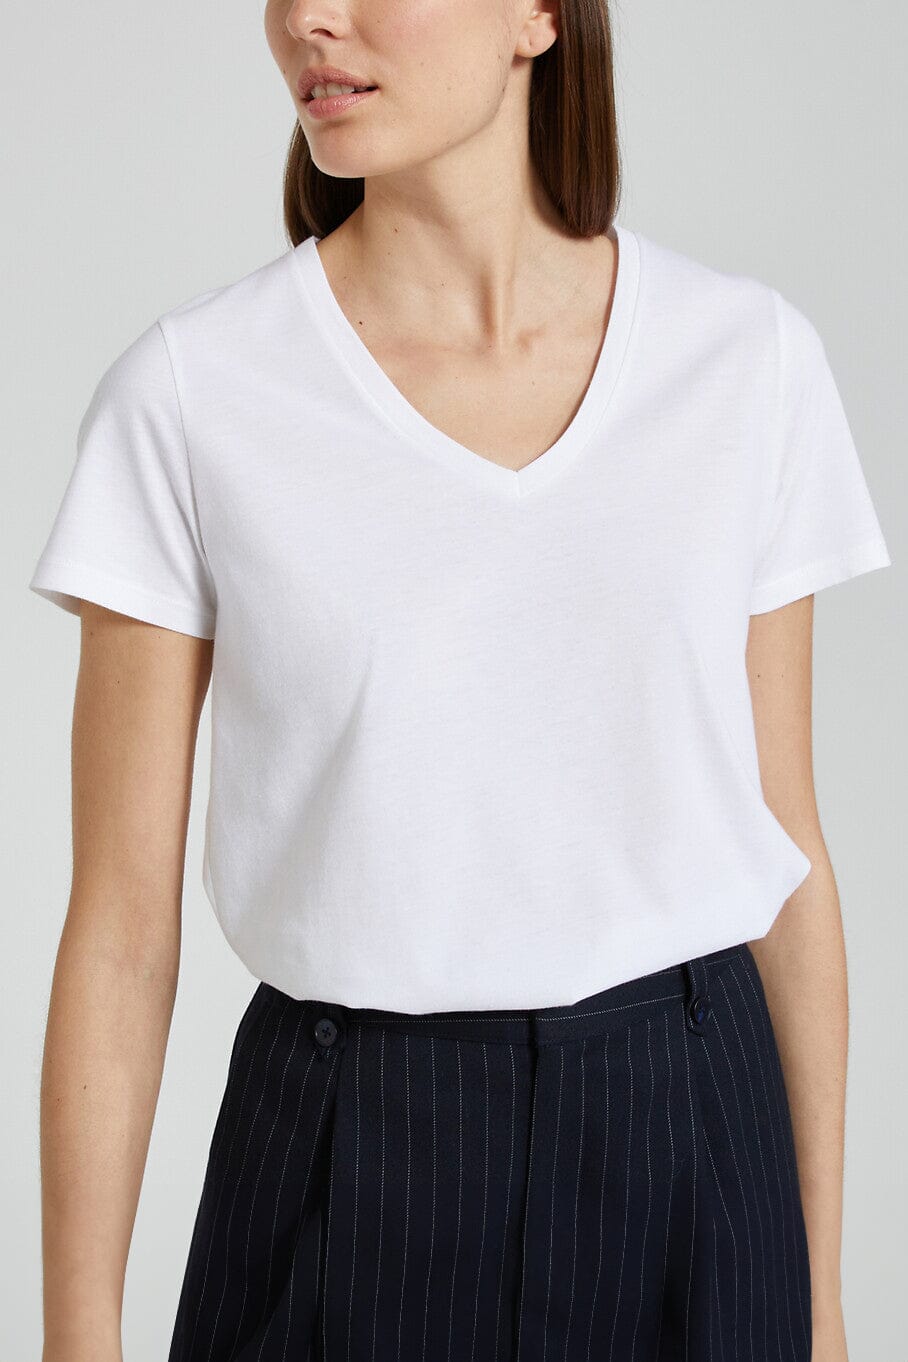 Berydale's Signature Comfort: Women's Premium Cotton Blend V-Neck Tee Women's Tee Shirt Image 